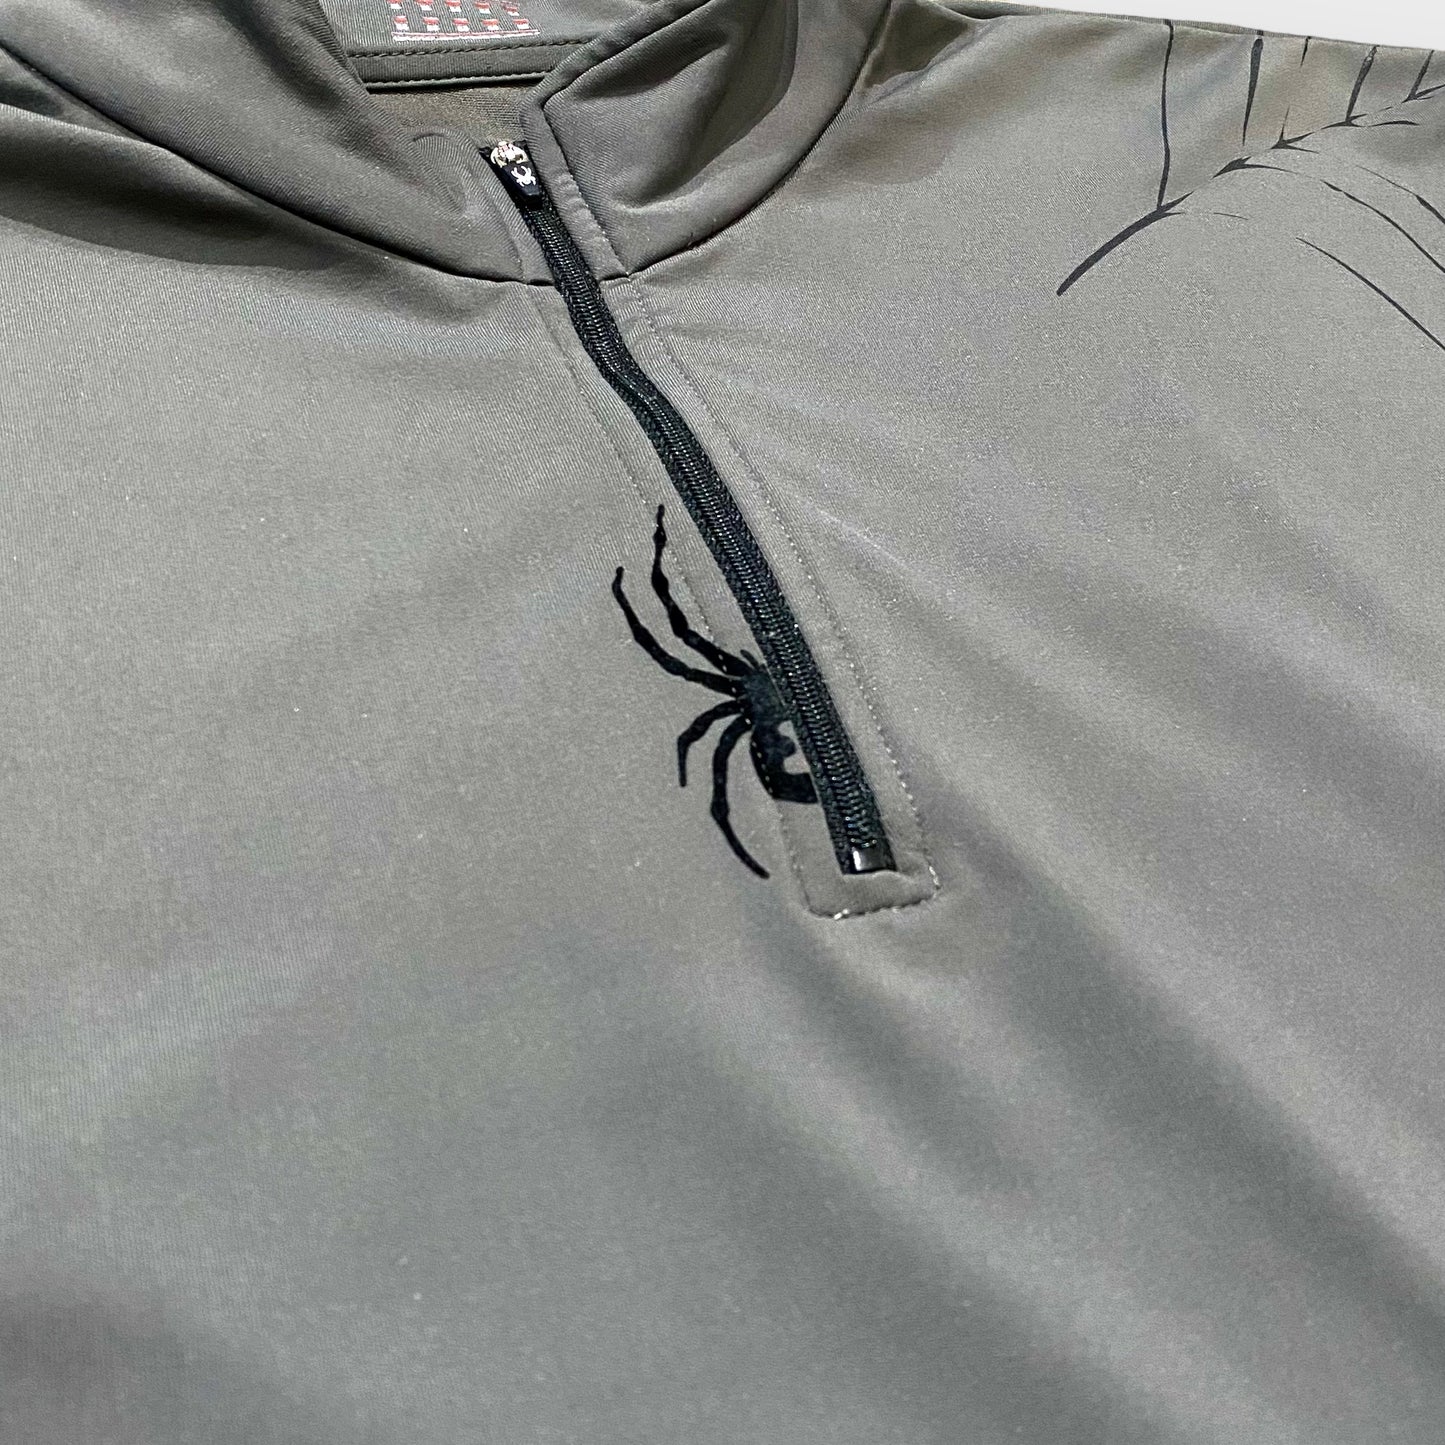 "SPYDER" Spyder design polyester half zip top